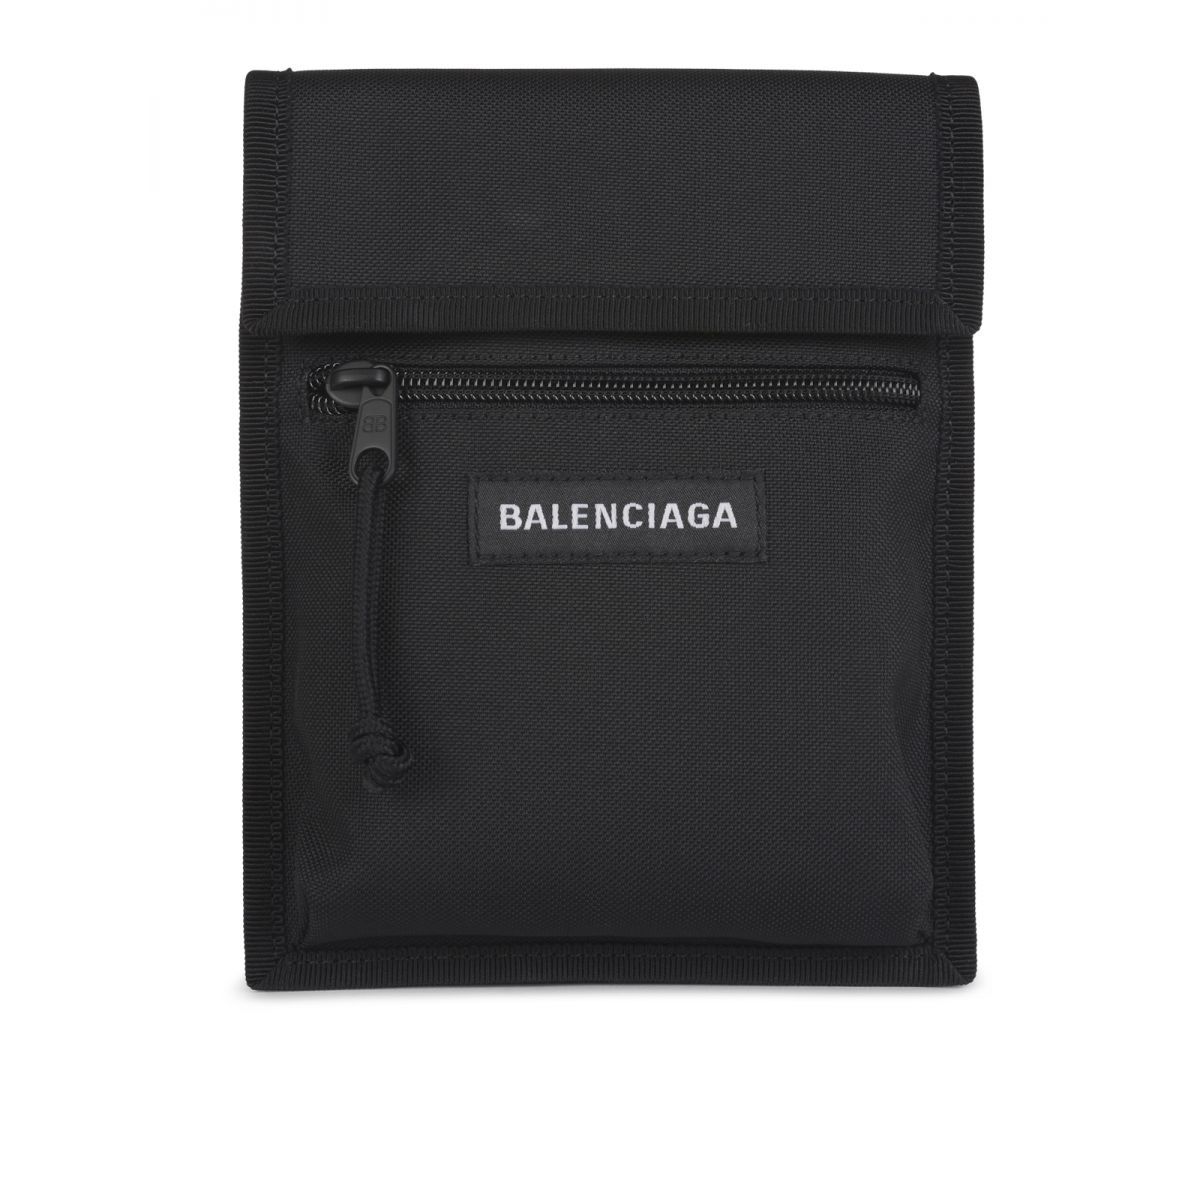 BALENCIAGA - Men's shoulder bag